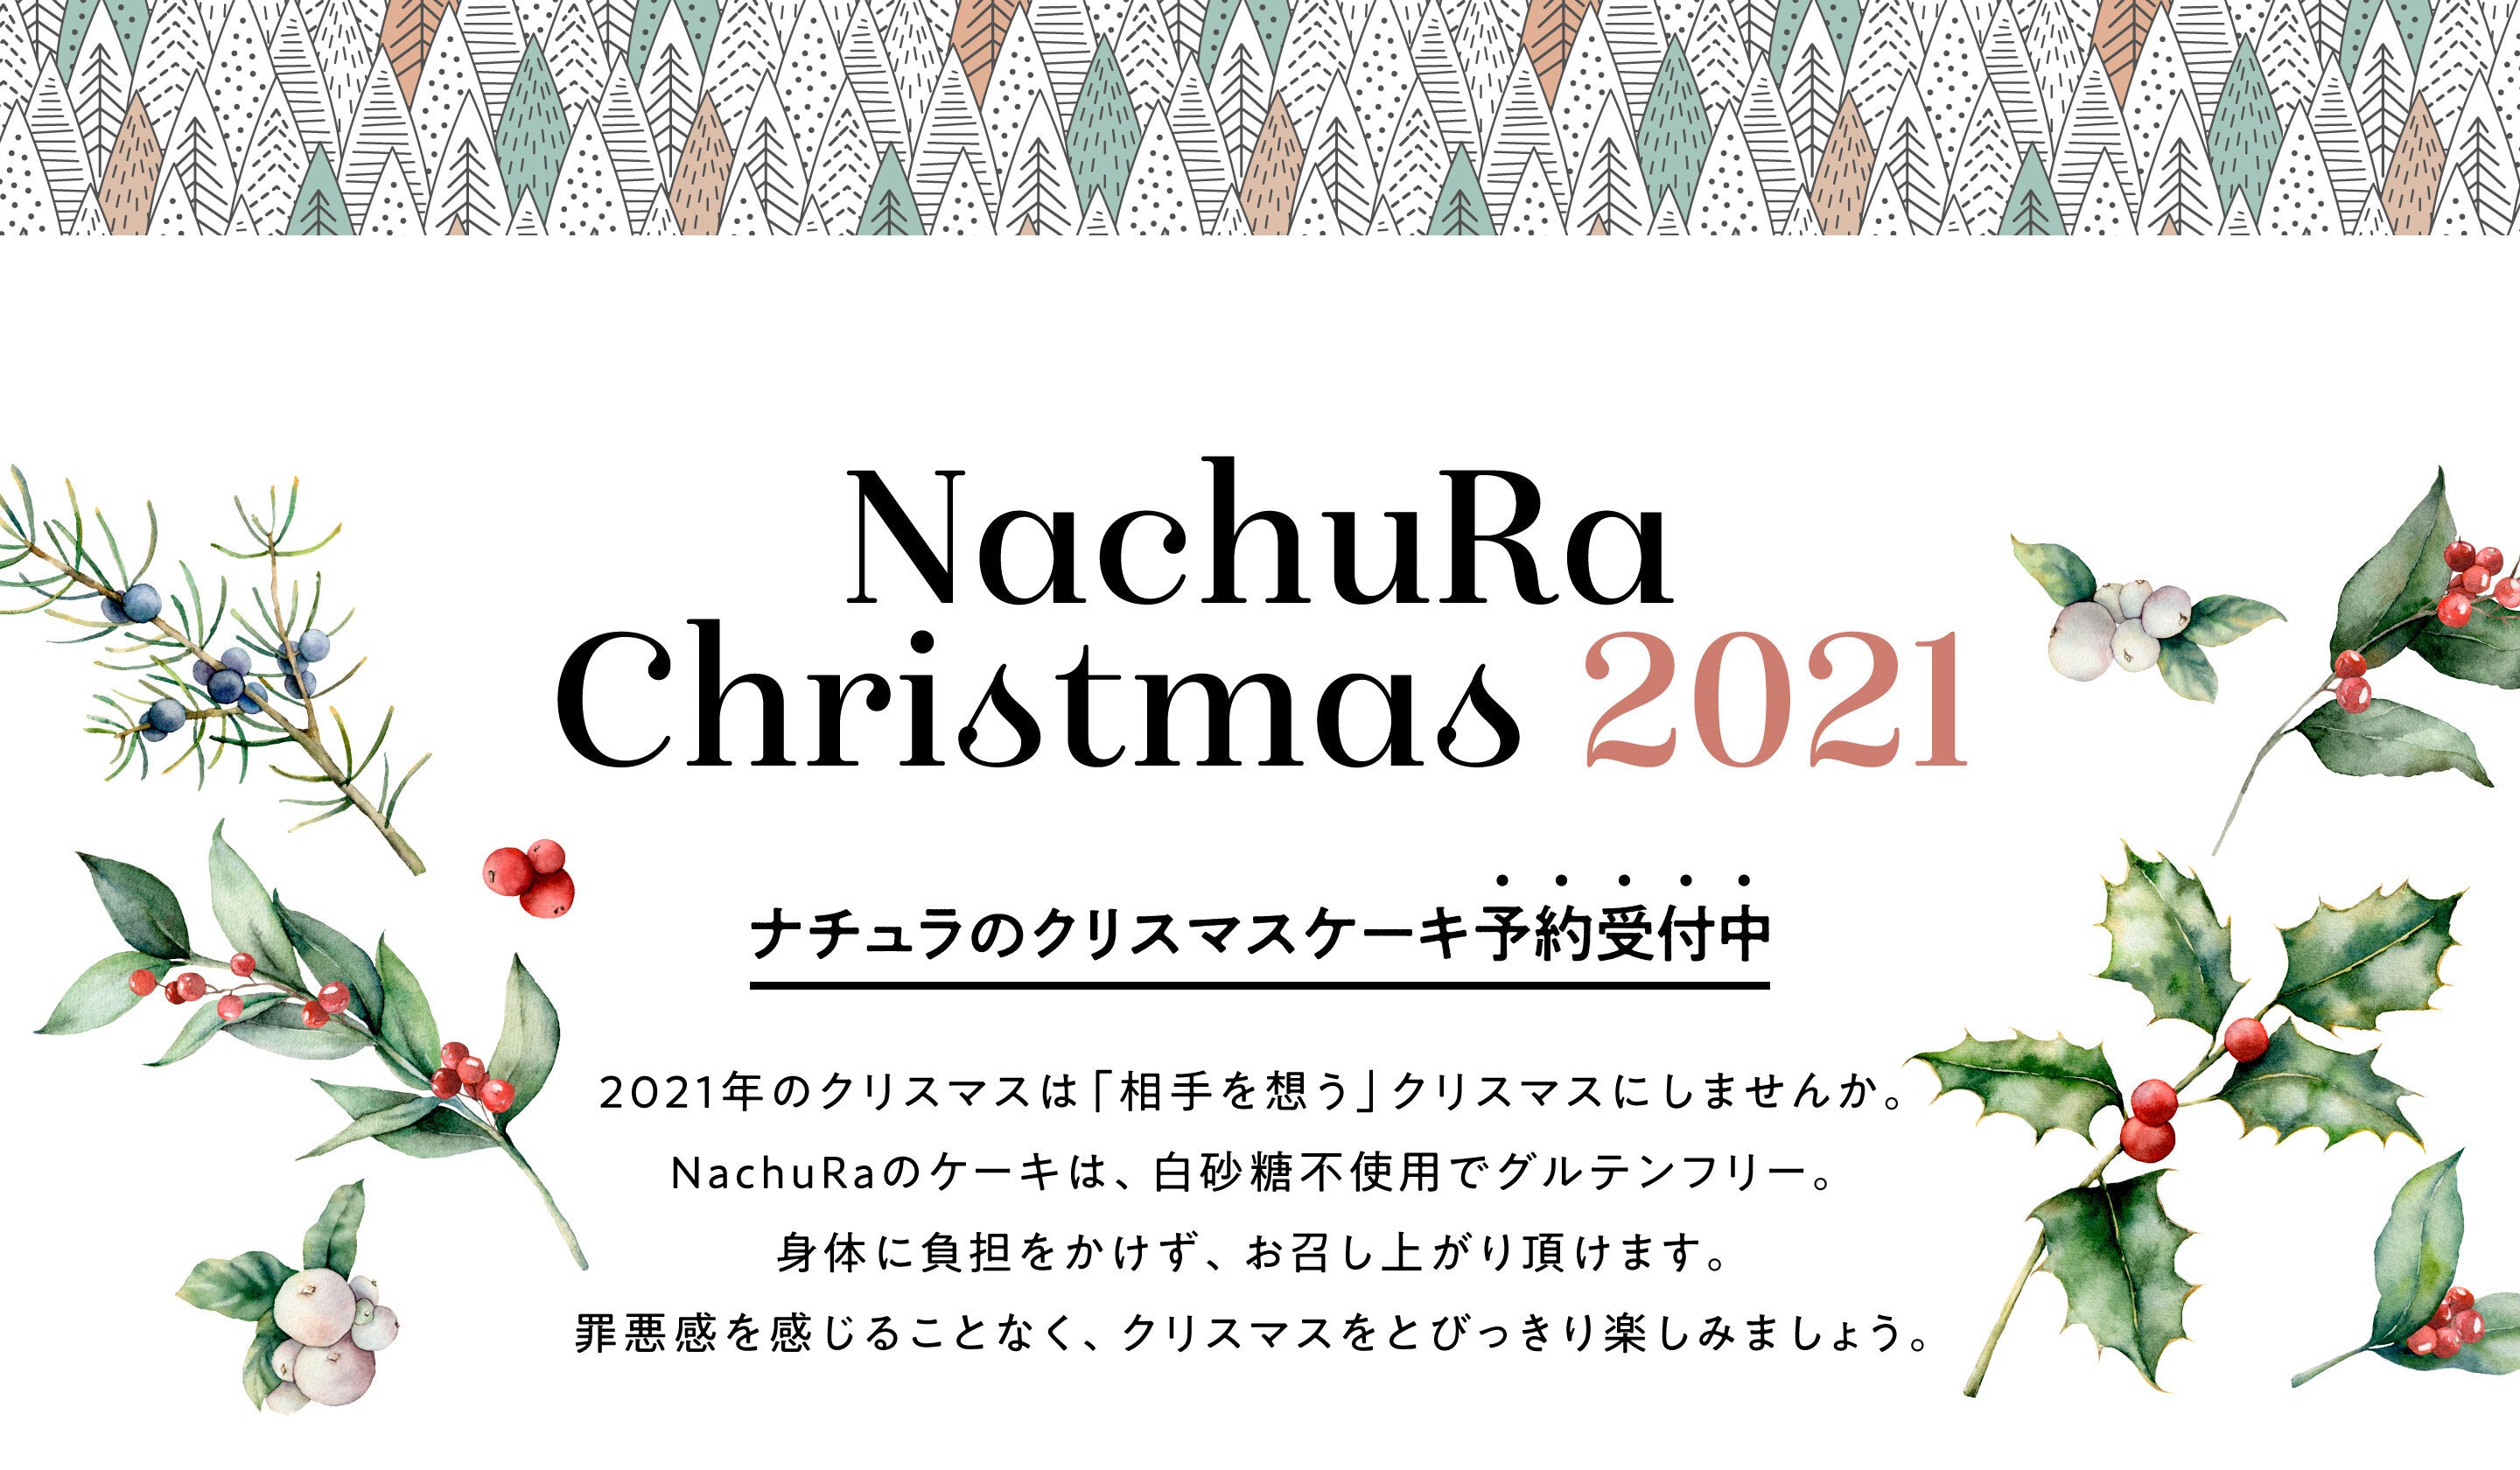 NachuRa Christmas 2021